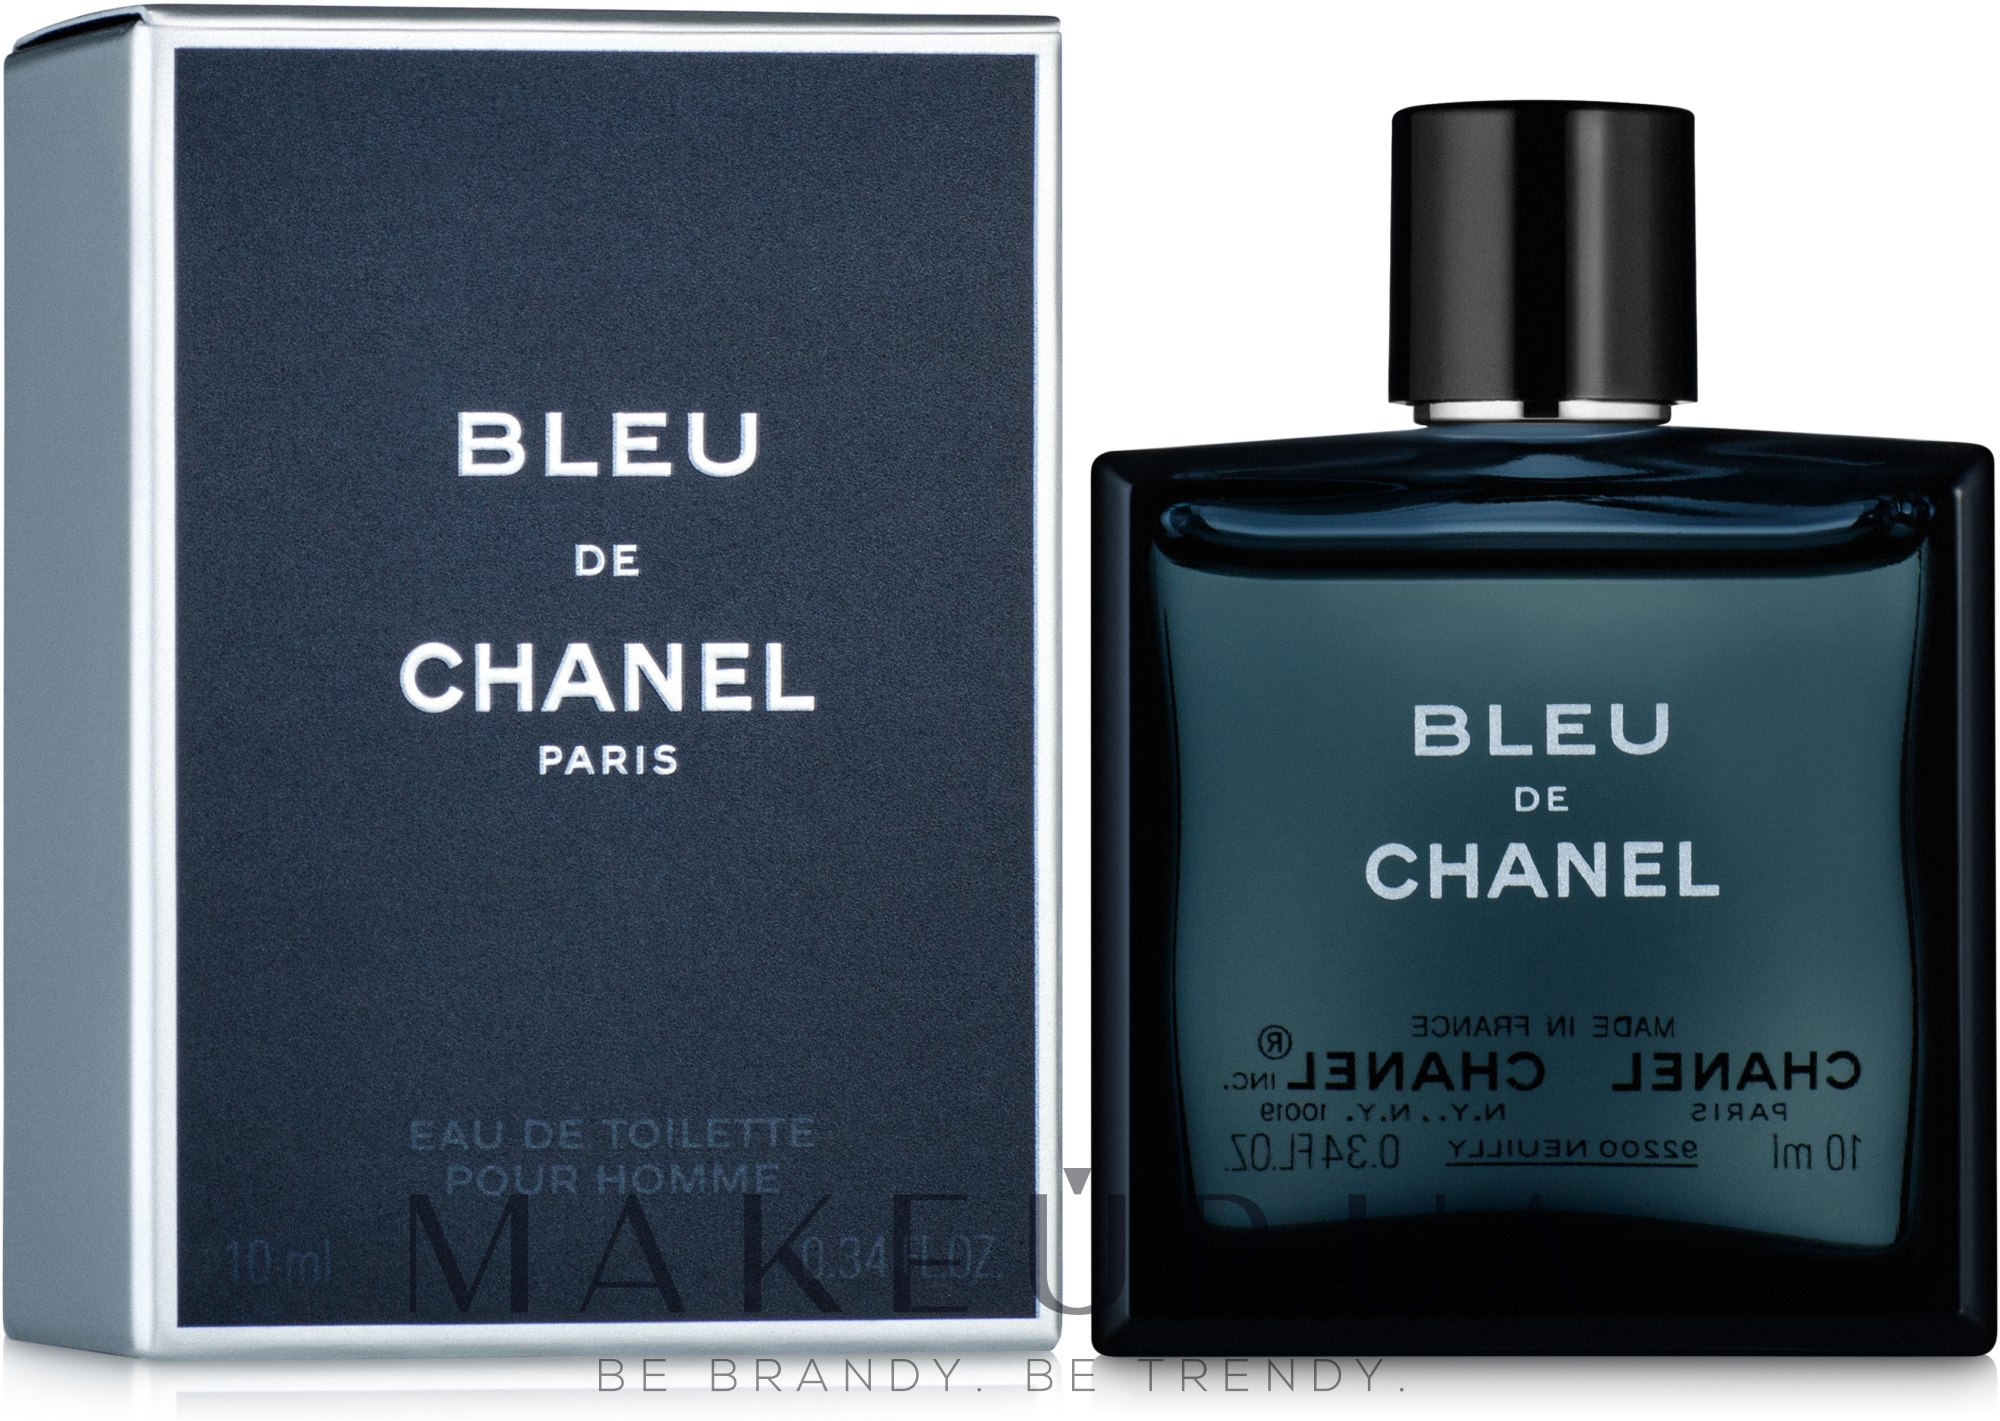 Chanel bleu de Chanel EDT man 10ml Mini. Bleu de Chanel миниатюра 10 мл. Bleu de Chanel цветная коробка. Bleu de Chanel реклама. Chanel bleu отзывы